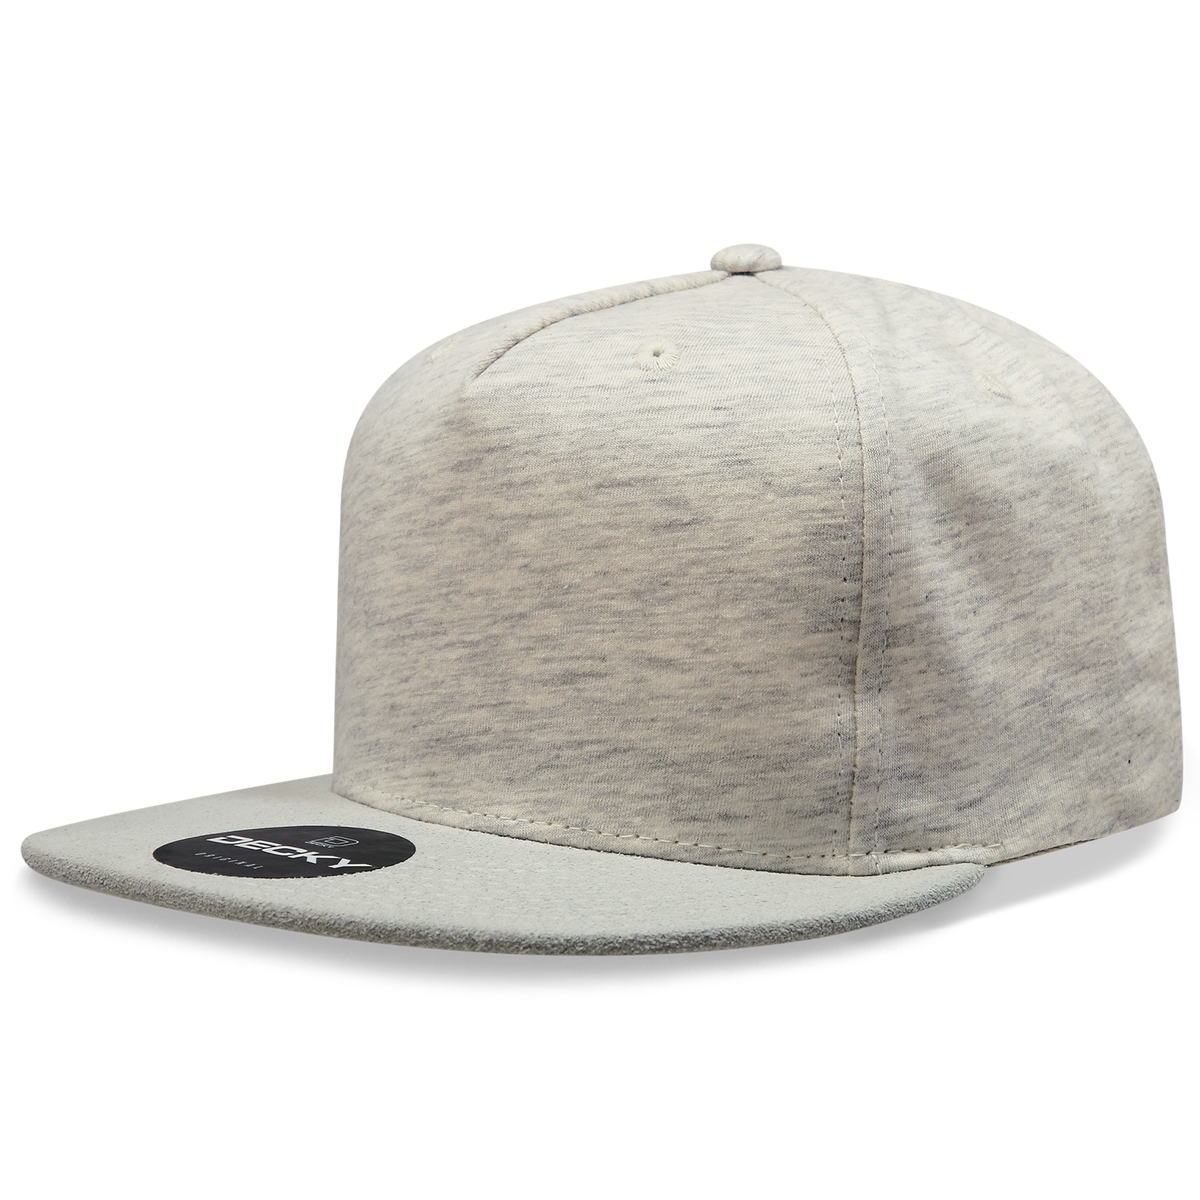 The Flat - – Cap, Snapback Decky Wholesale Park Heather Hat, 5 1132 Knit Jersey Panel Bill